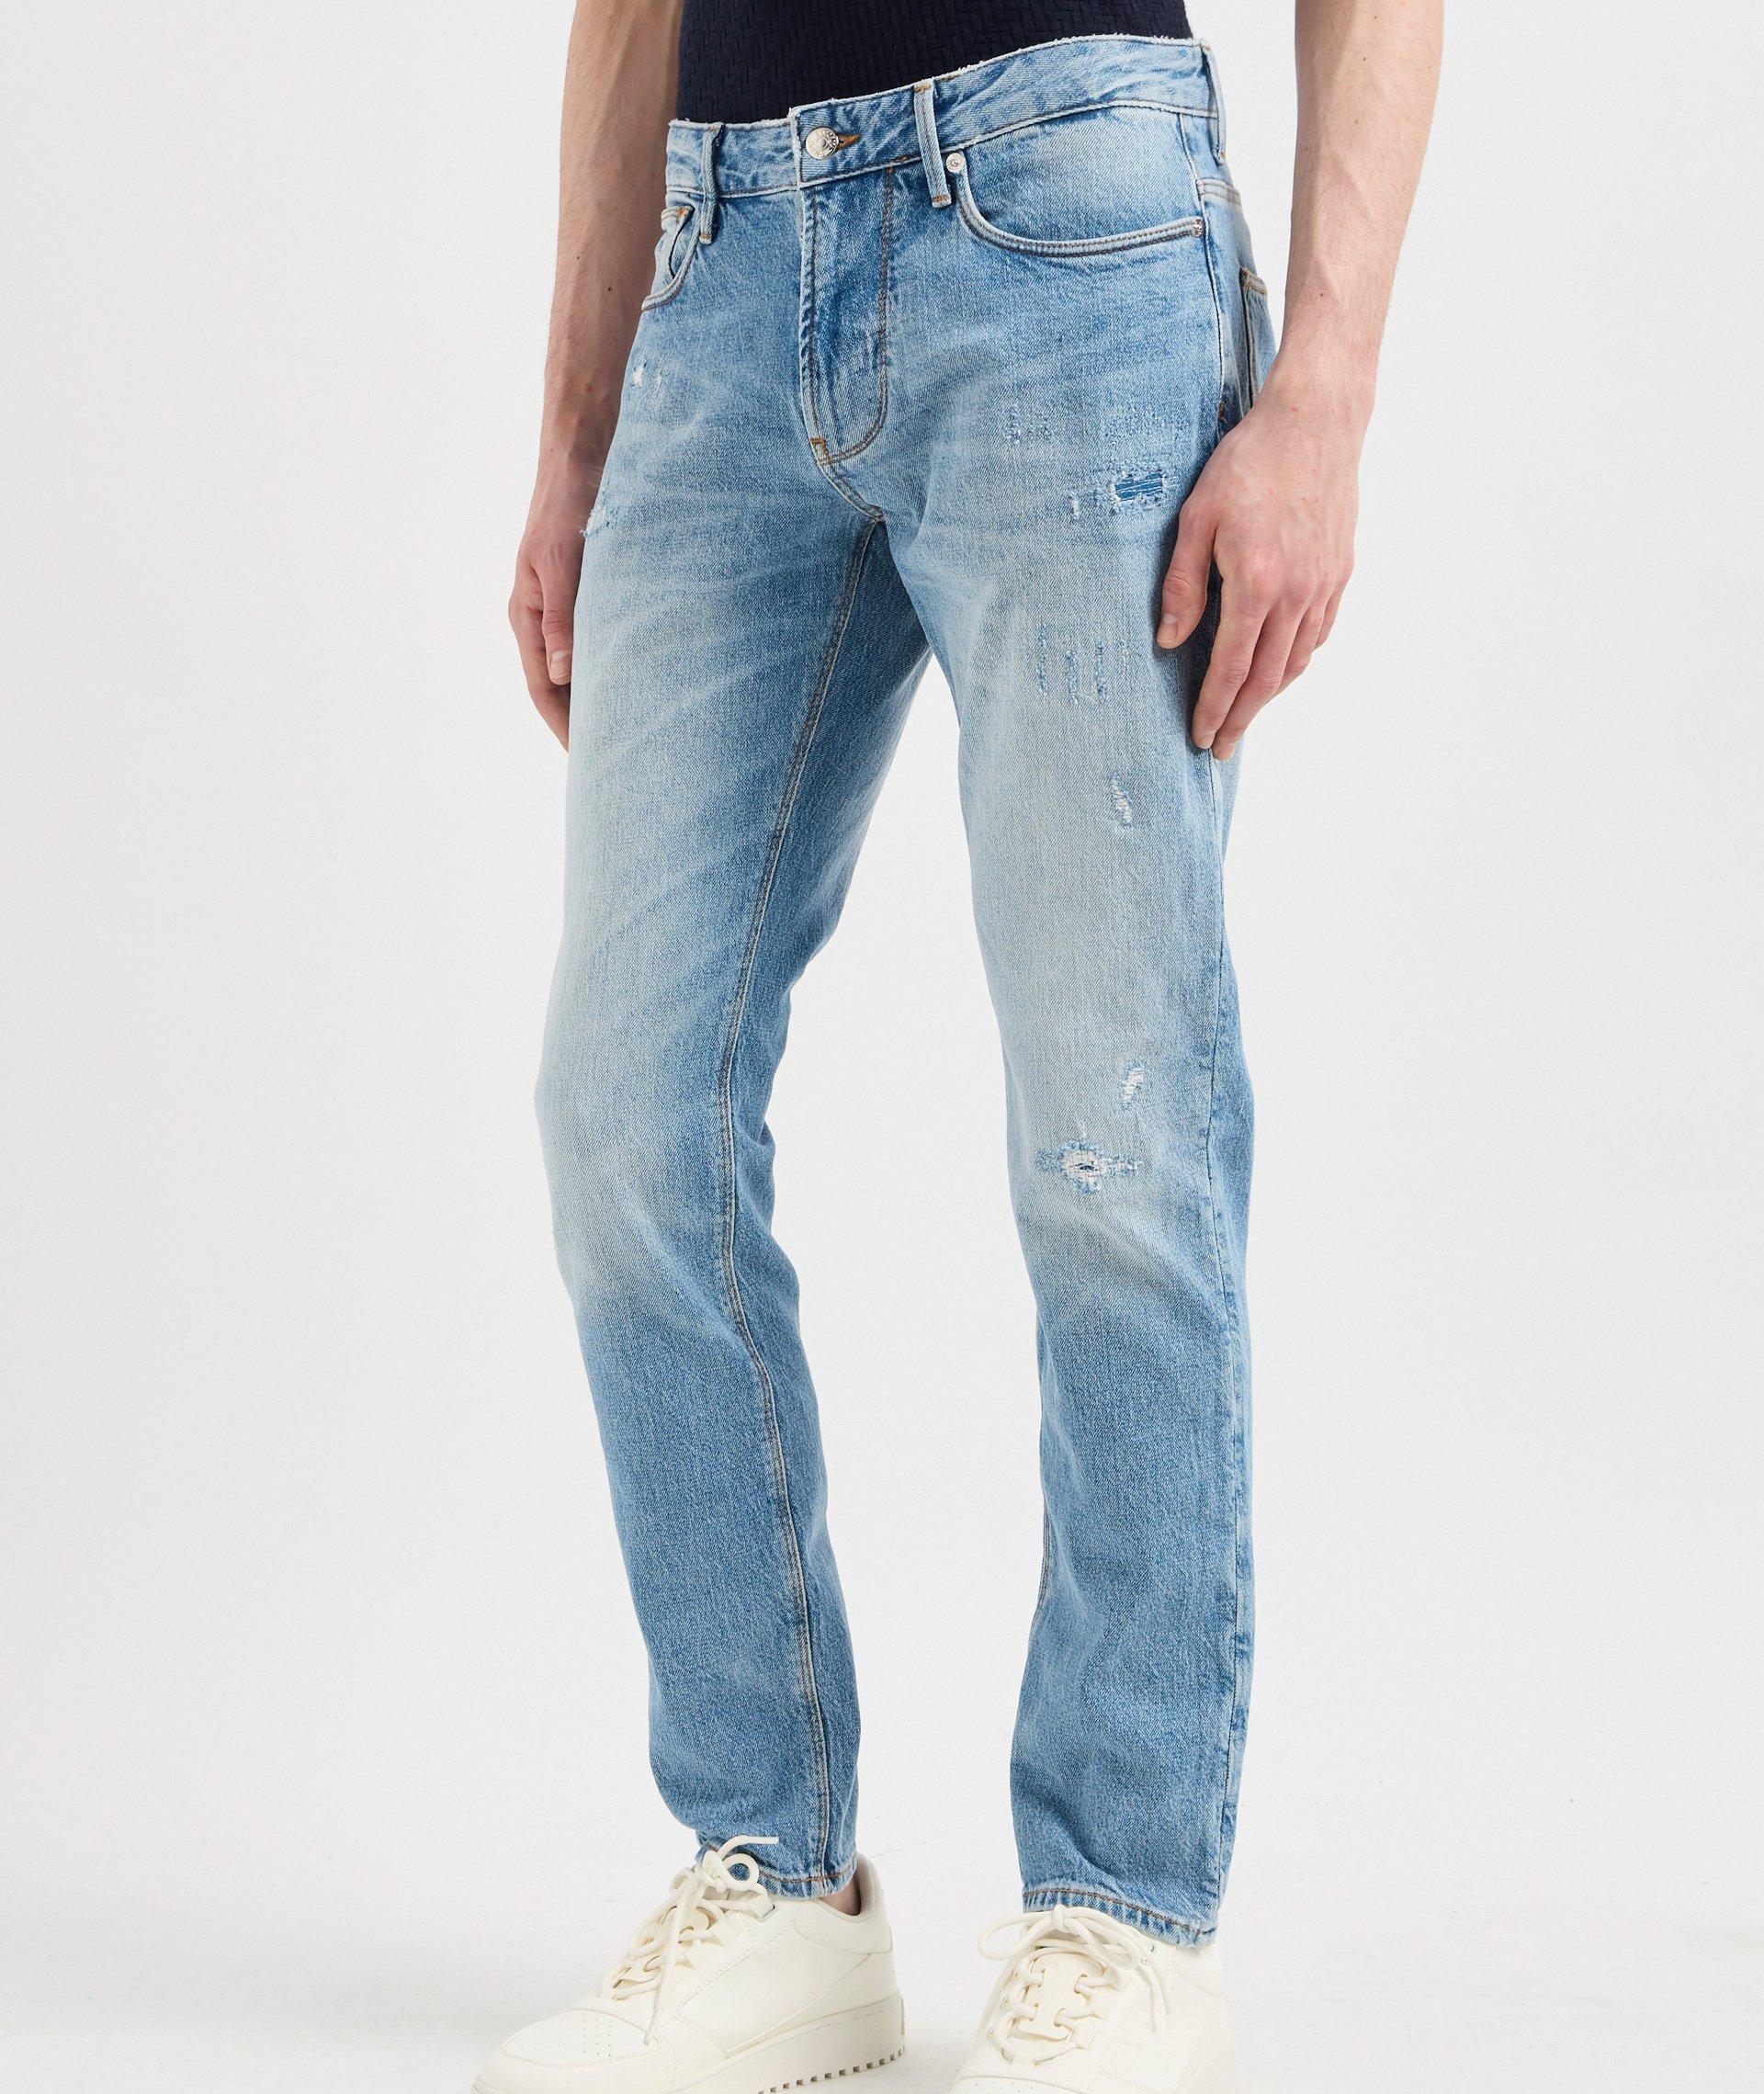 J06 Slim Fit Stretch-Cotton Jeans image 2